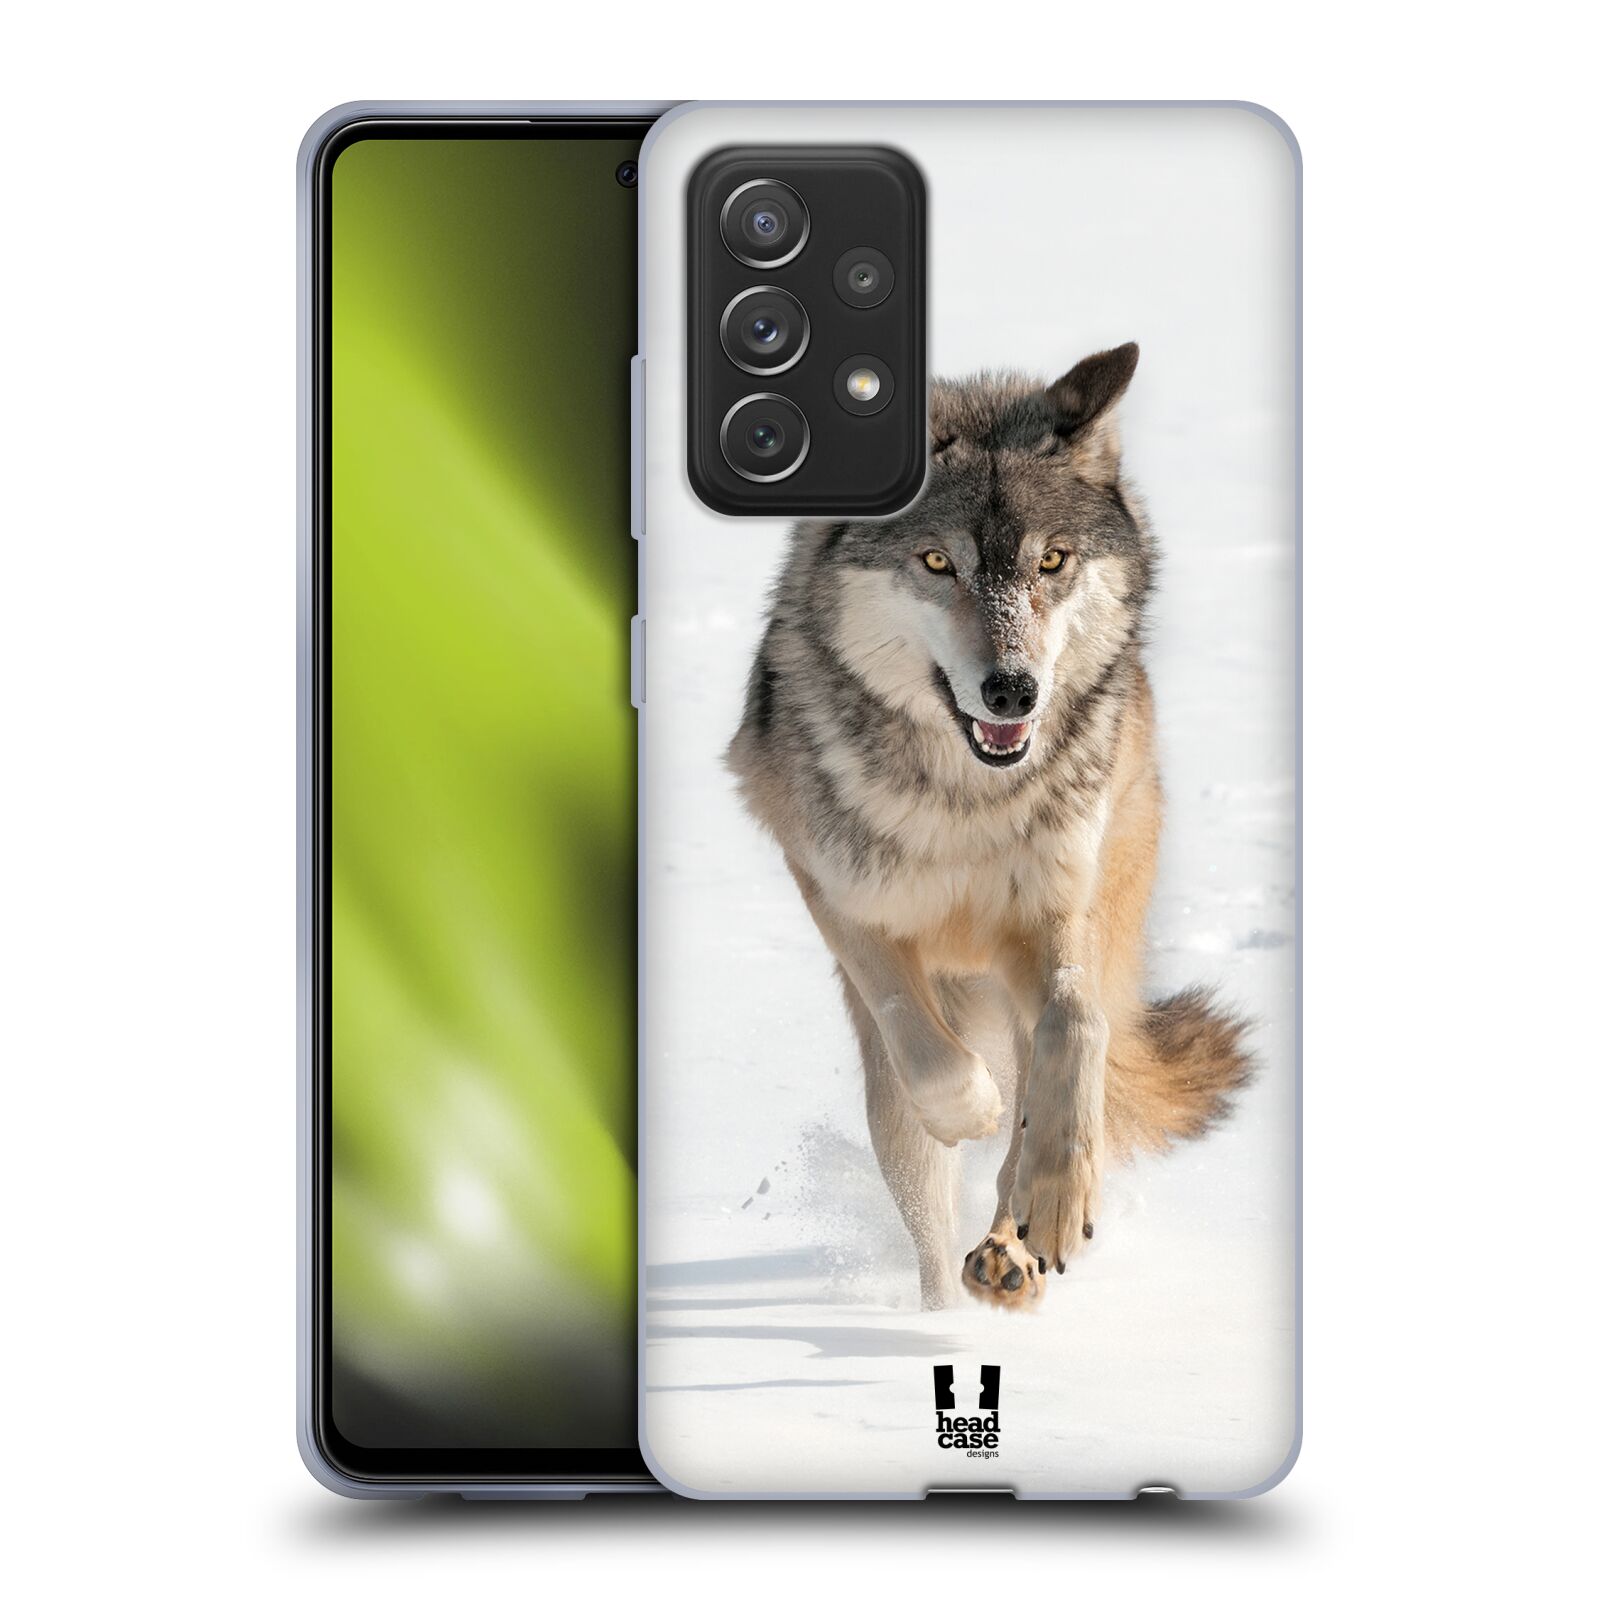 Plastový obal HEAD CASE na mobil Samsung Galaxy A72 / A72 5G vzor Divočina, Divoký život a zvířata foto BĚŽÍCÍ VLK